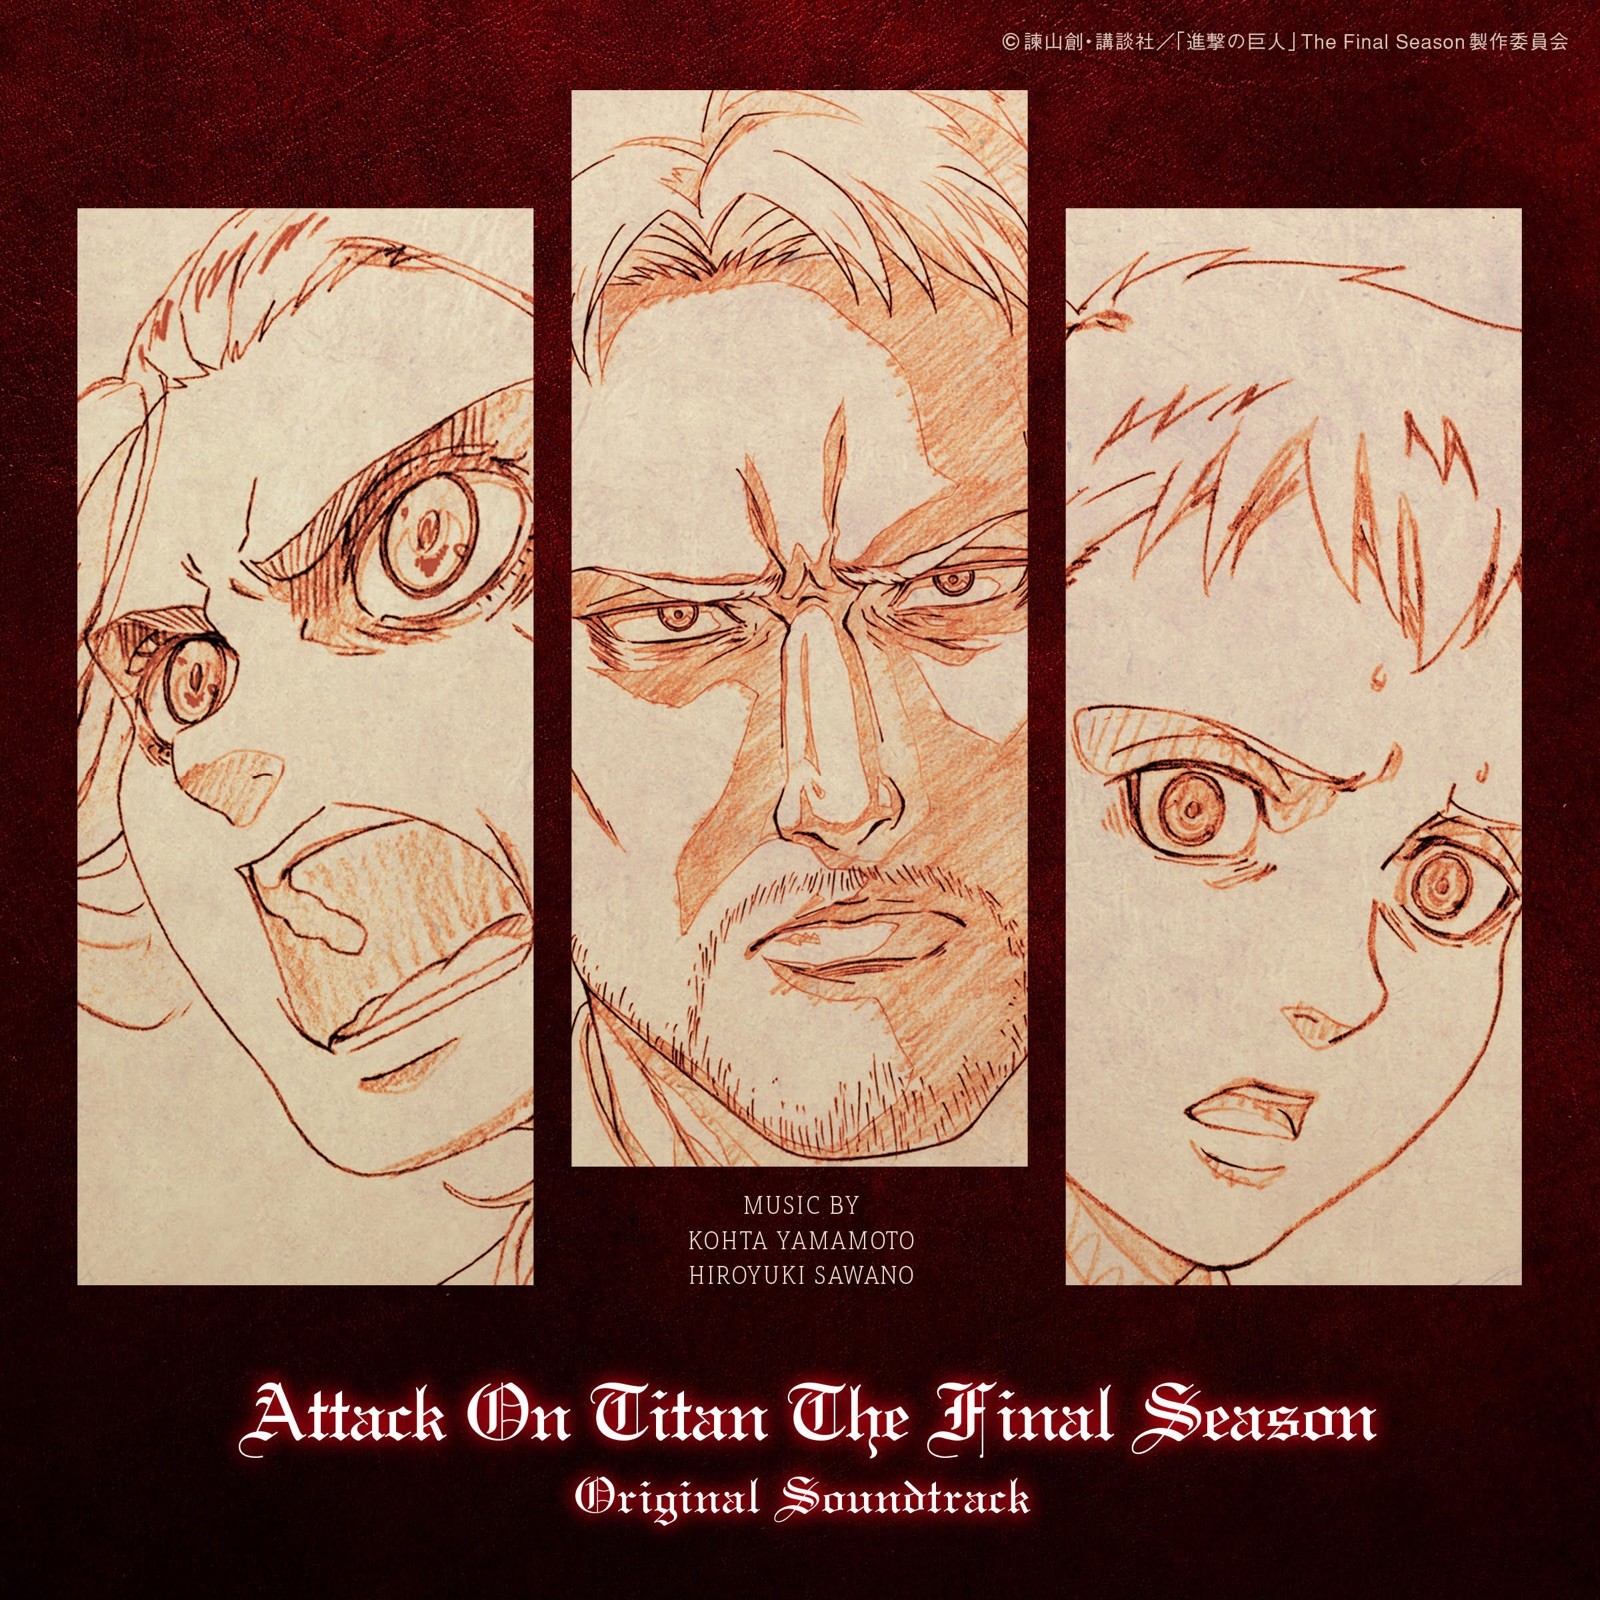 Hiroyuki Sawano, KOHTA YAMAMOTO - Attack On Titan  (進撃の巨人) The Final Season Original Soundtrack (2021-06-23) [FLAC 24bit/96kHz] Download